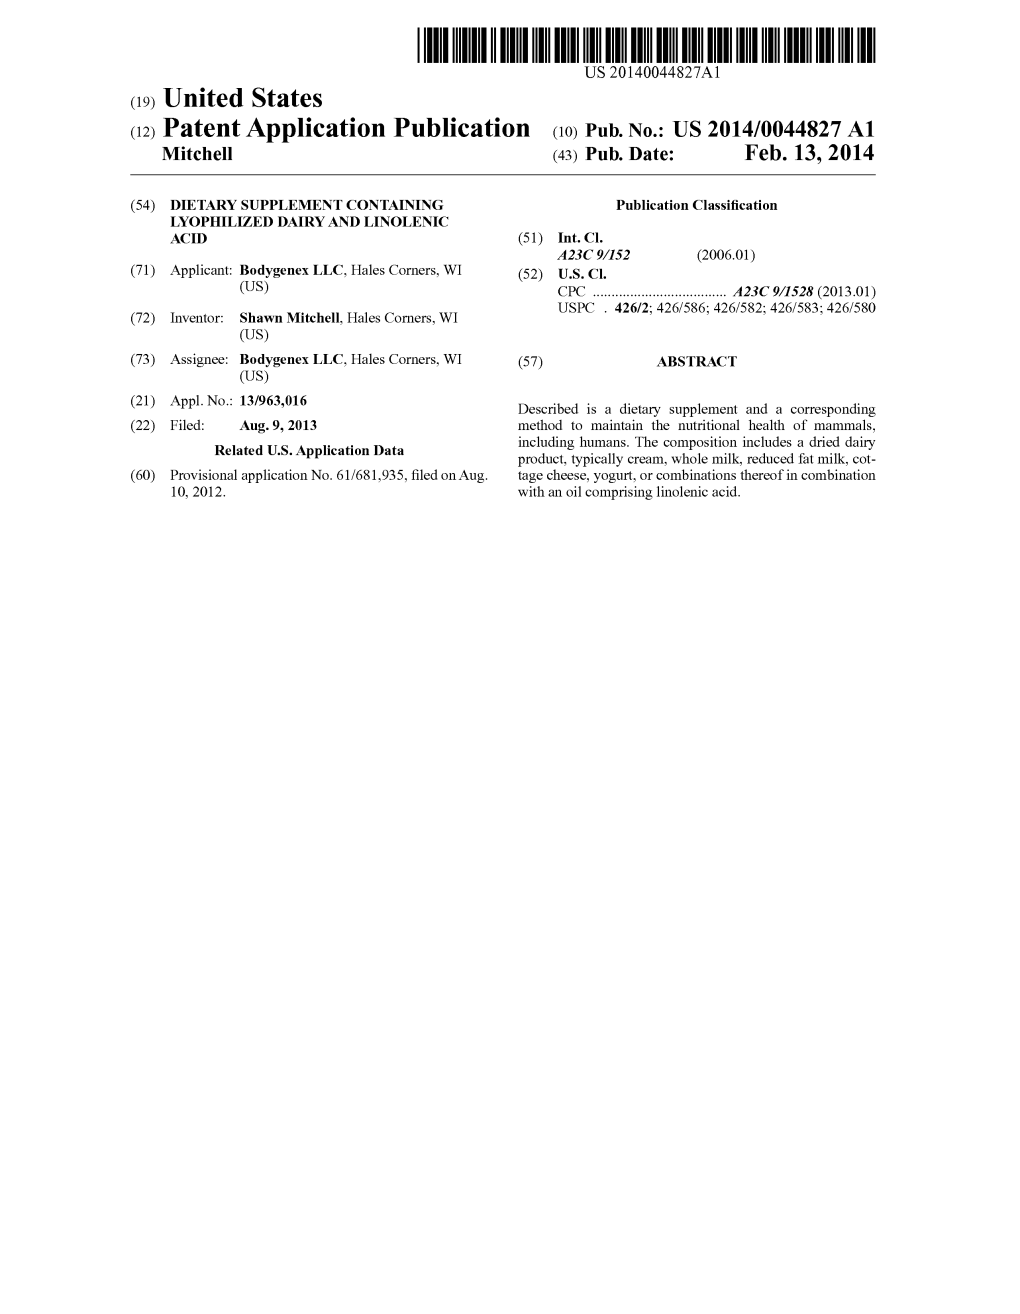 (12) Patent Application Publication (10) Pub. No.: US 2014/0044827 A1 Mitchell (43) Pub